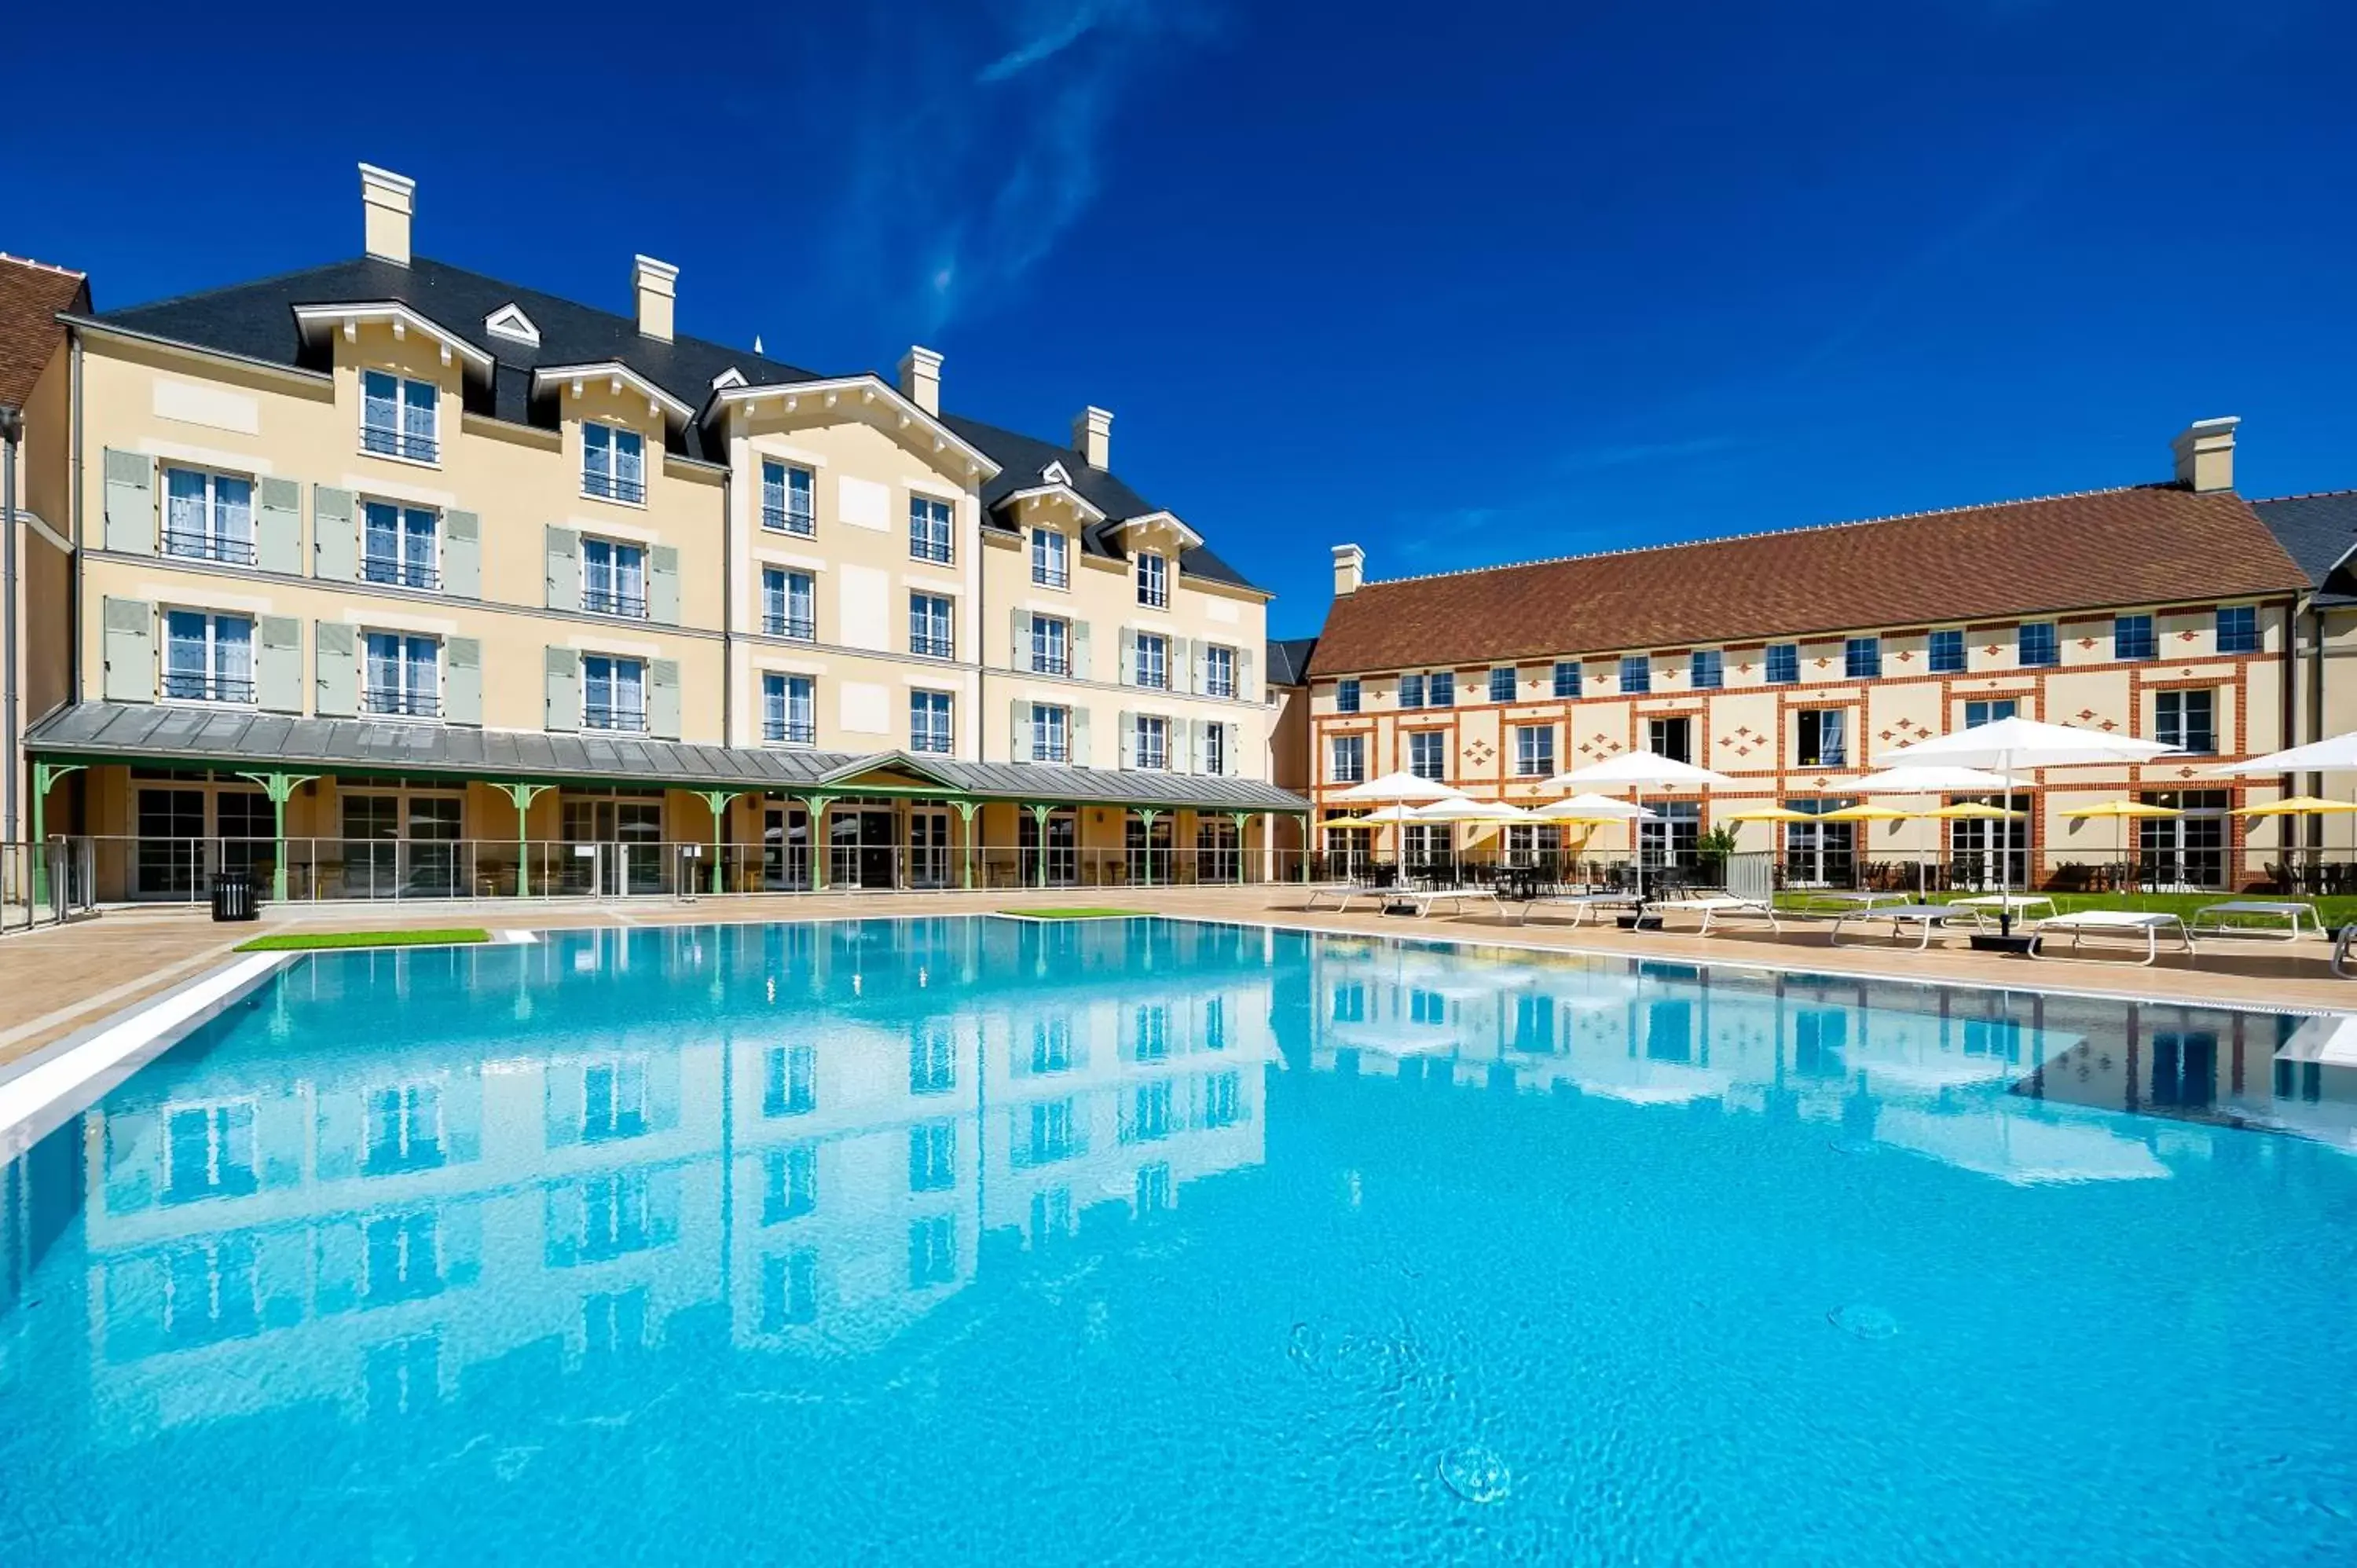 Property building, Swimming Pool in Staycity Aparthotels near Disneyland Paris